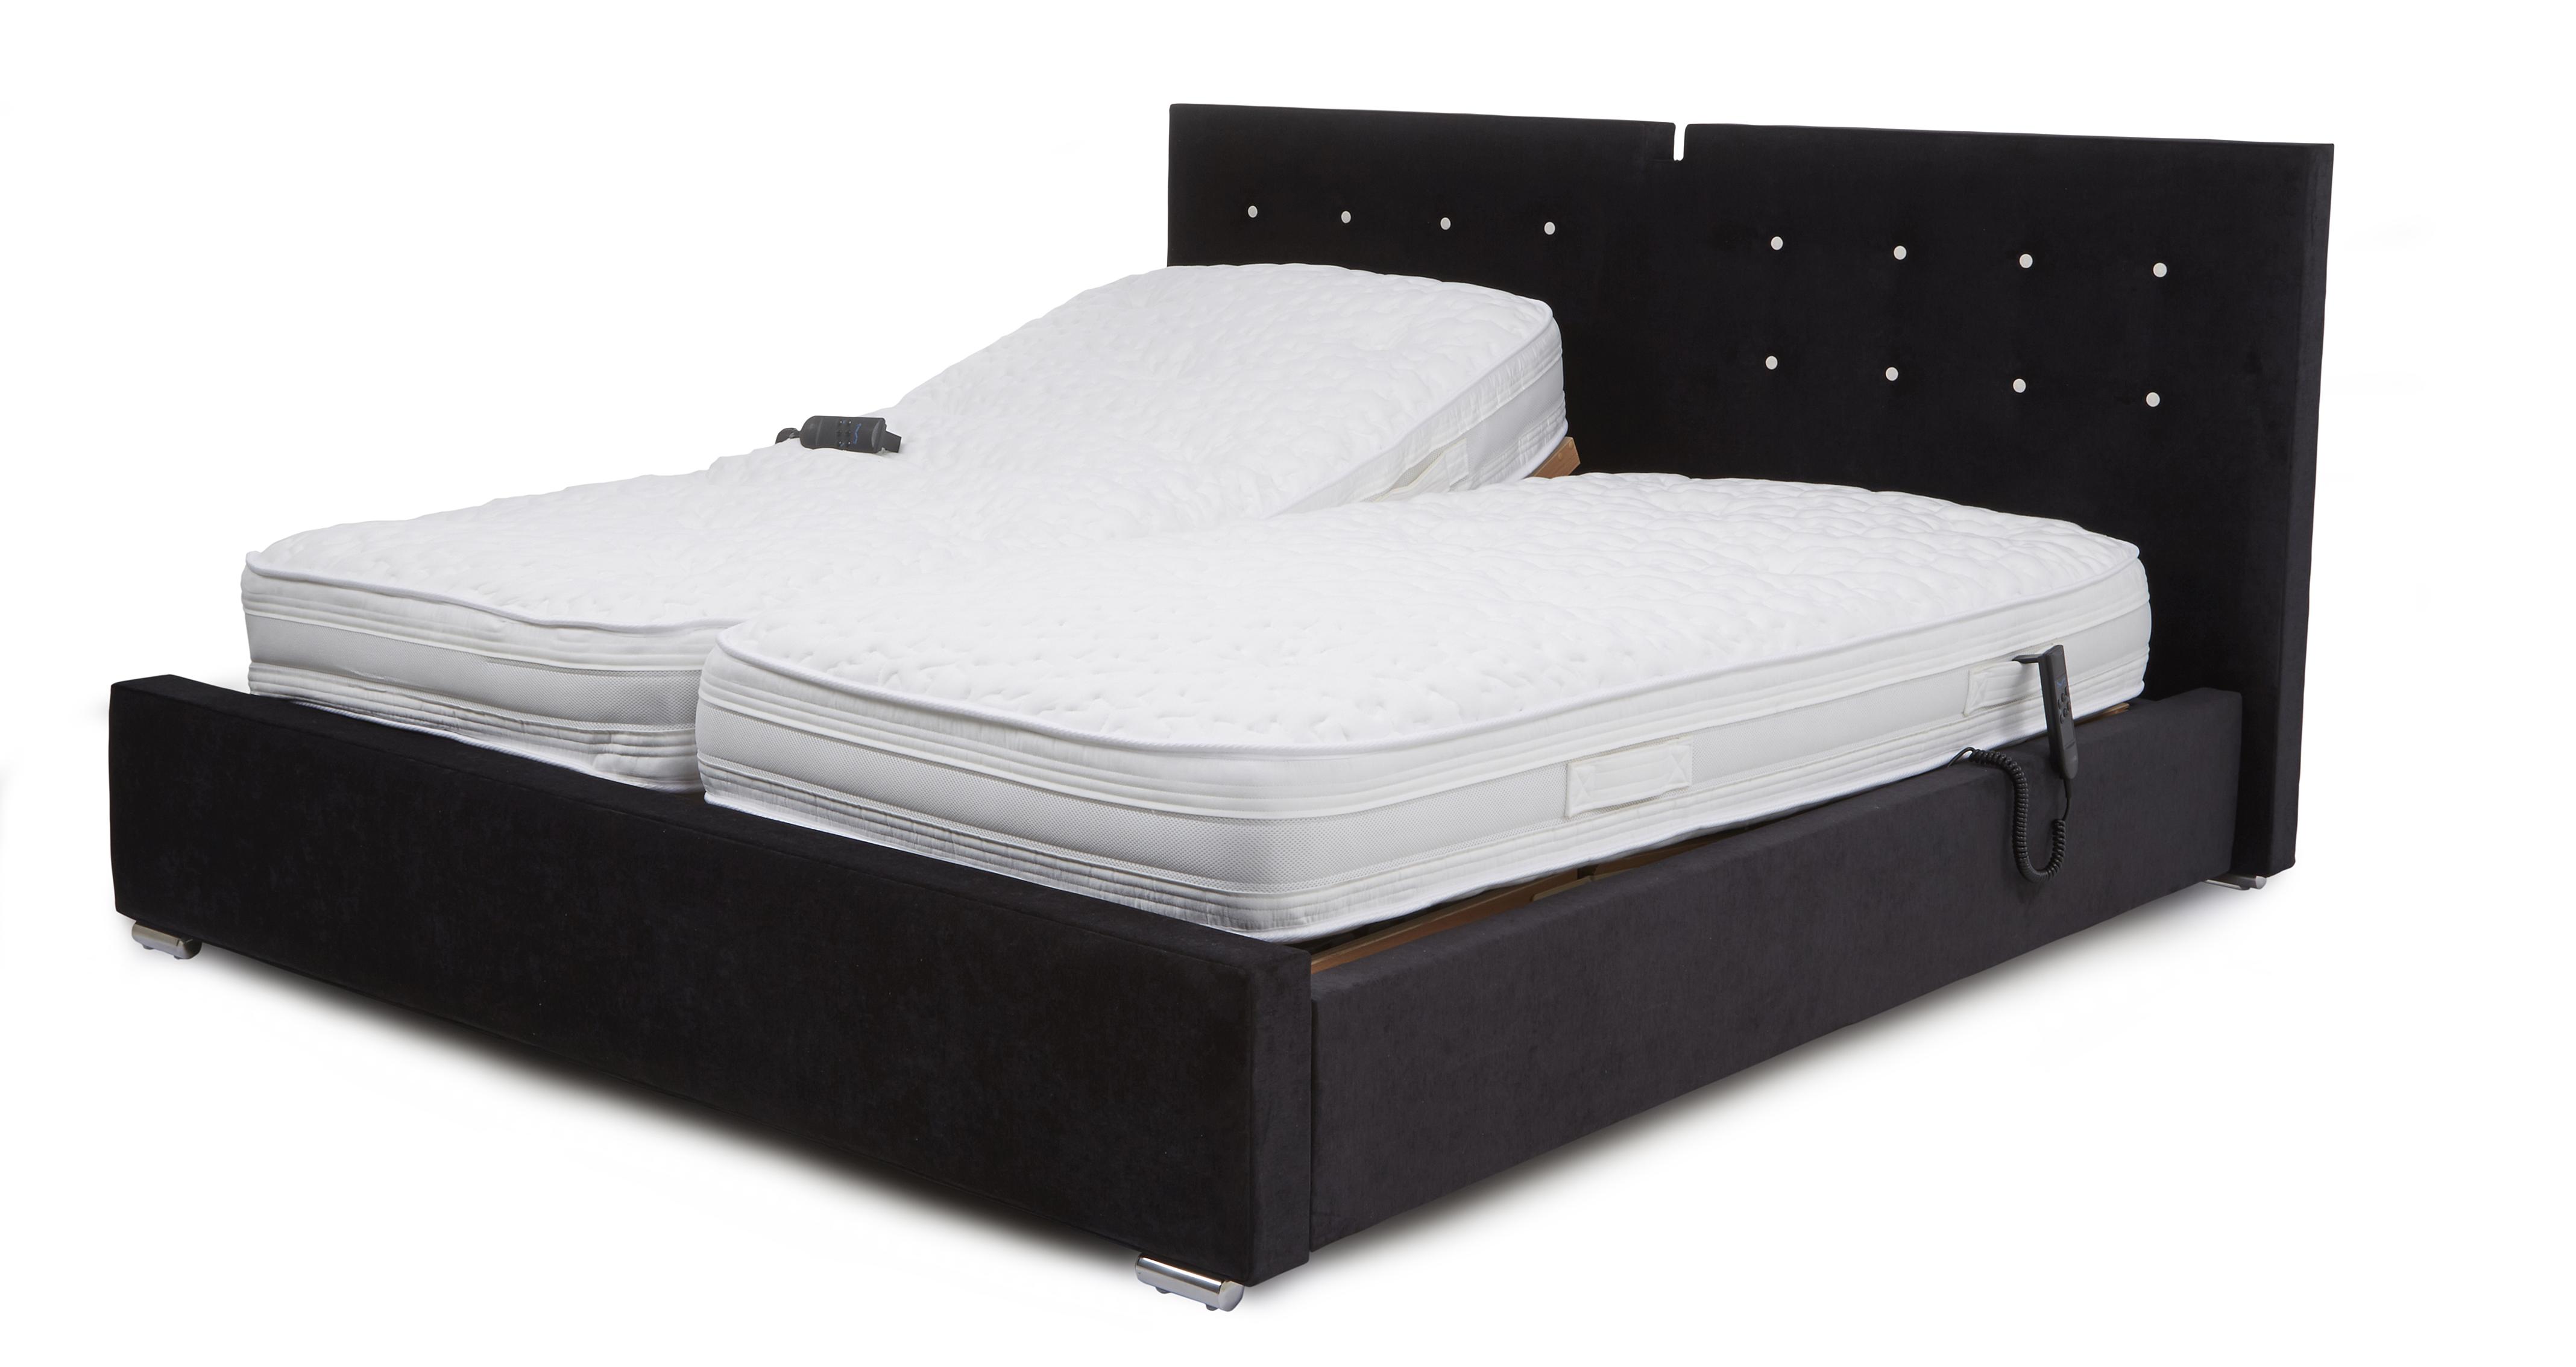 dfs mattress king size